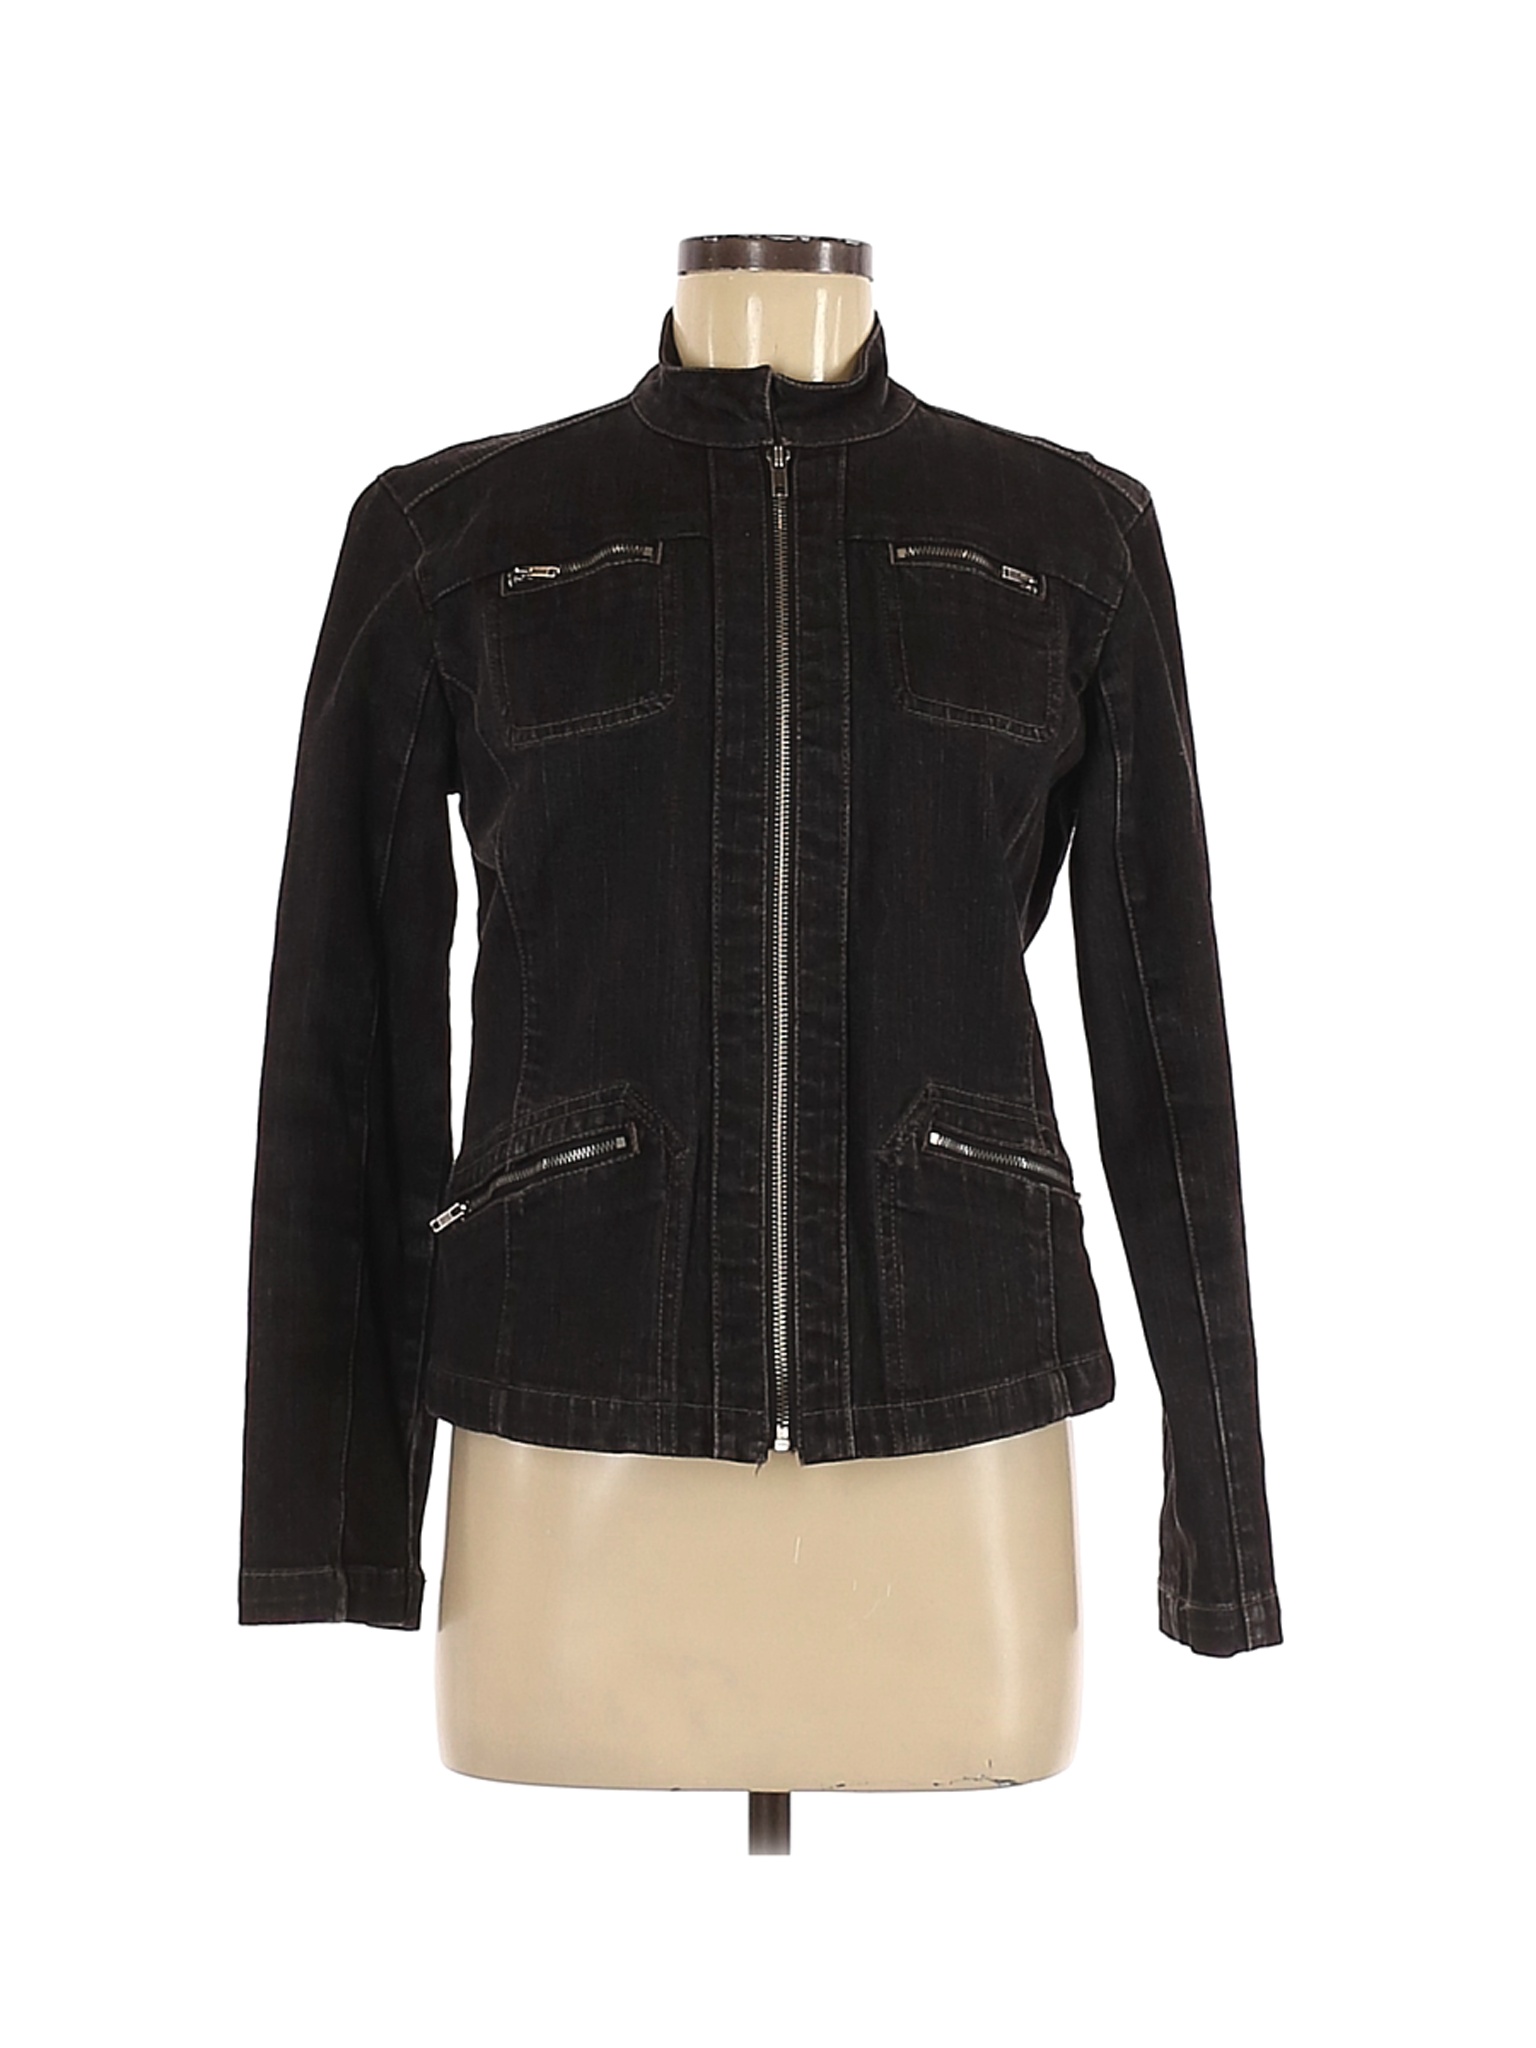 Chico's Women Black Denim Jacket S | eBay